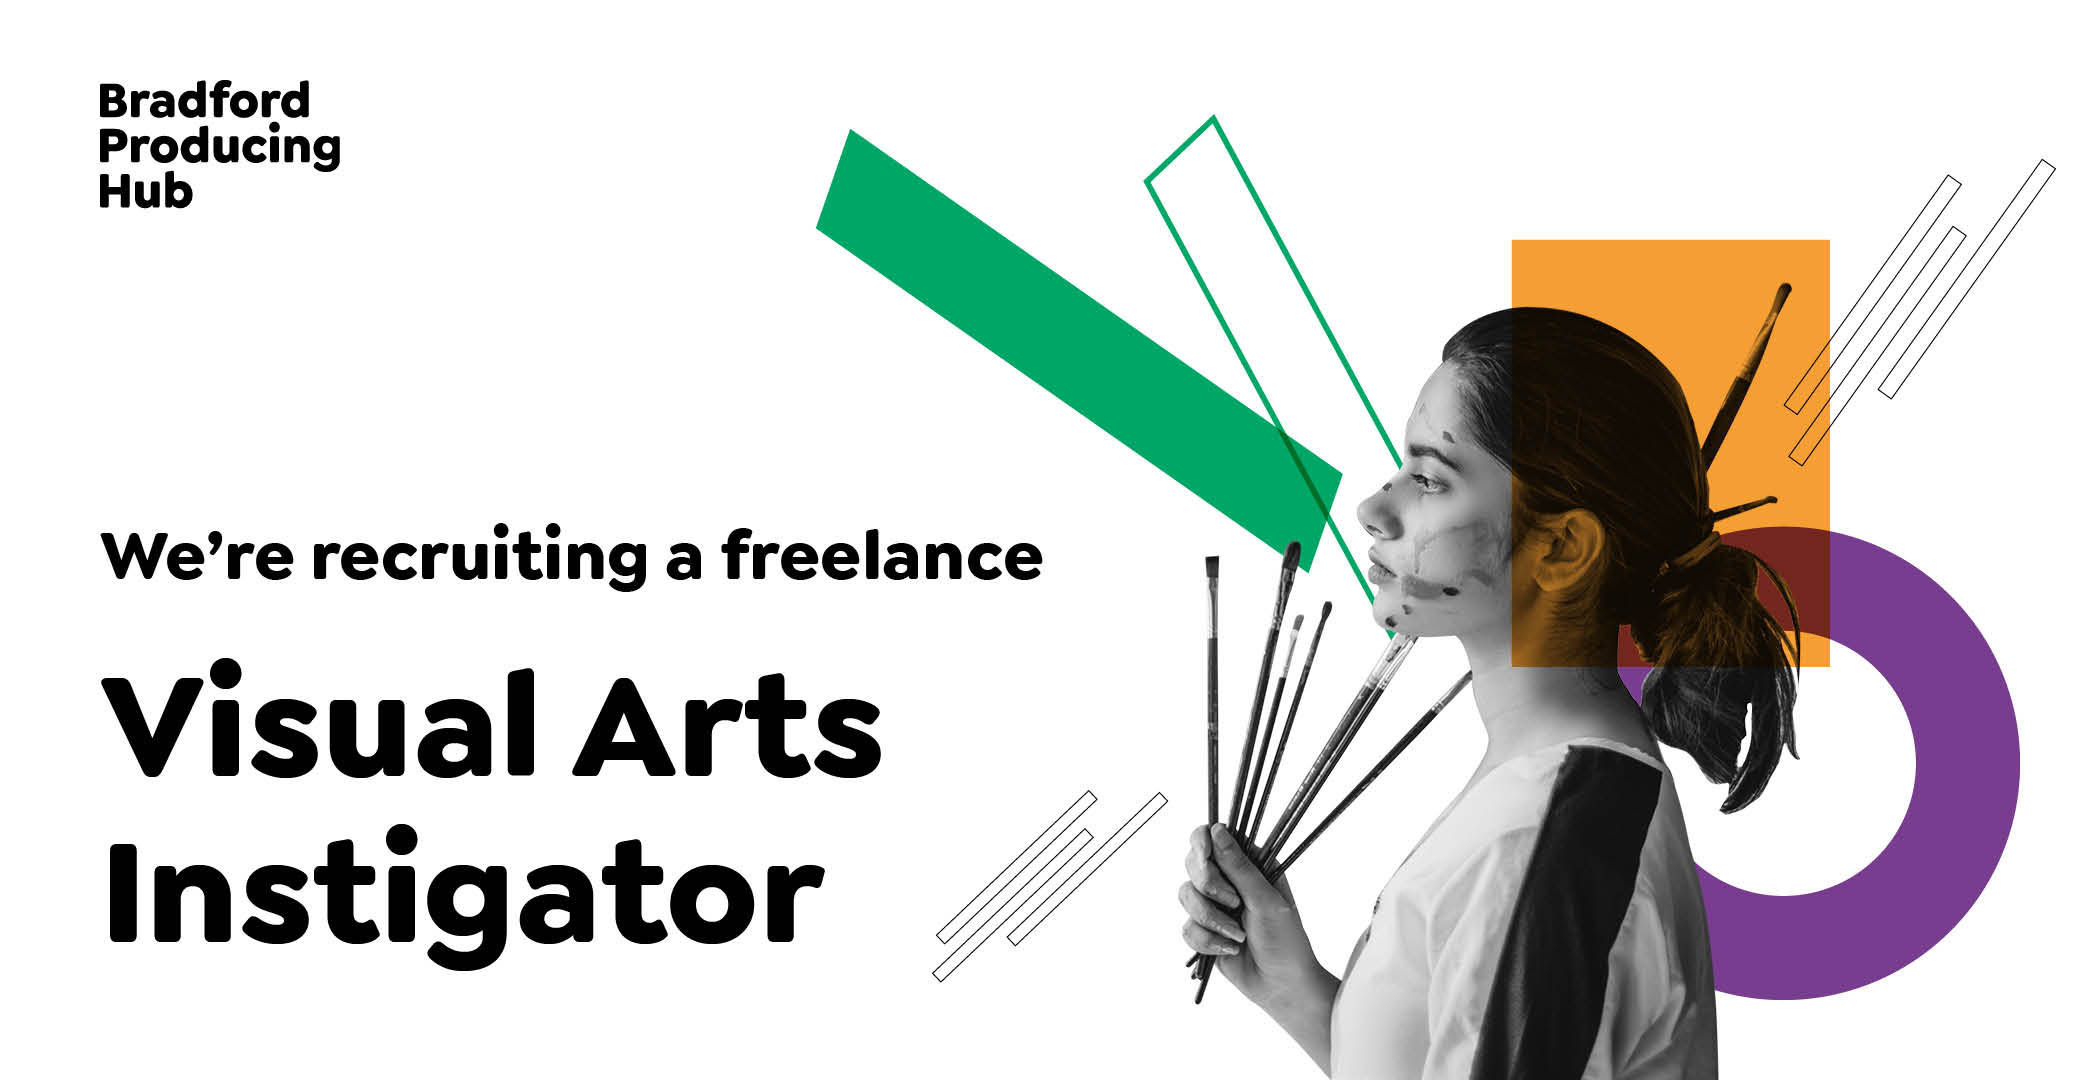 We're recruiting a freelance Visual Arts Instigator